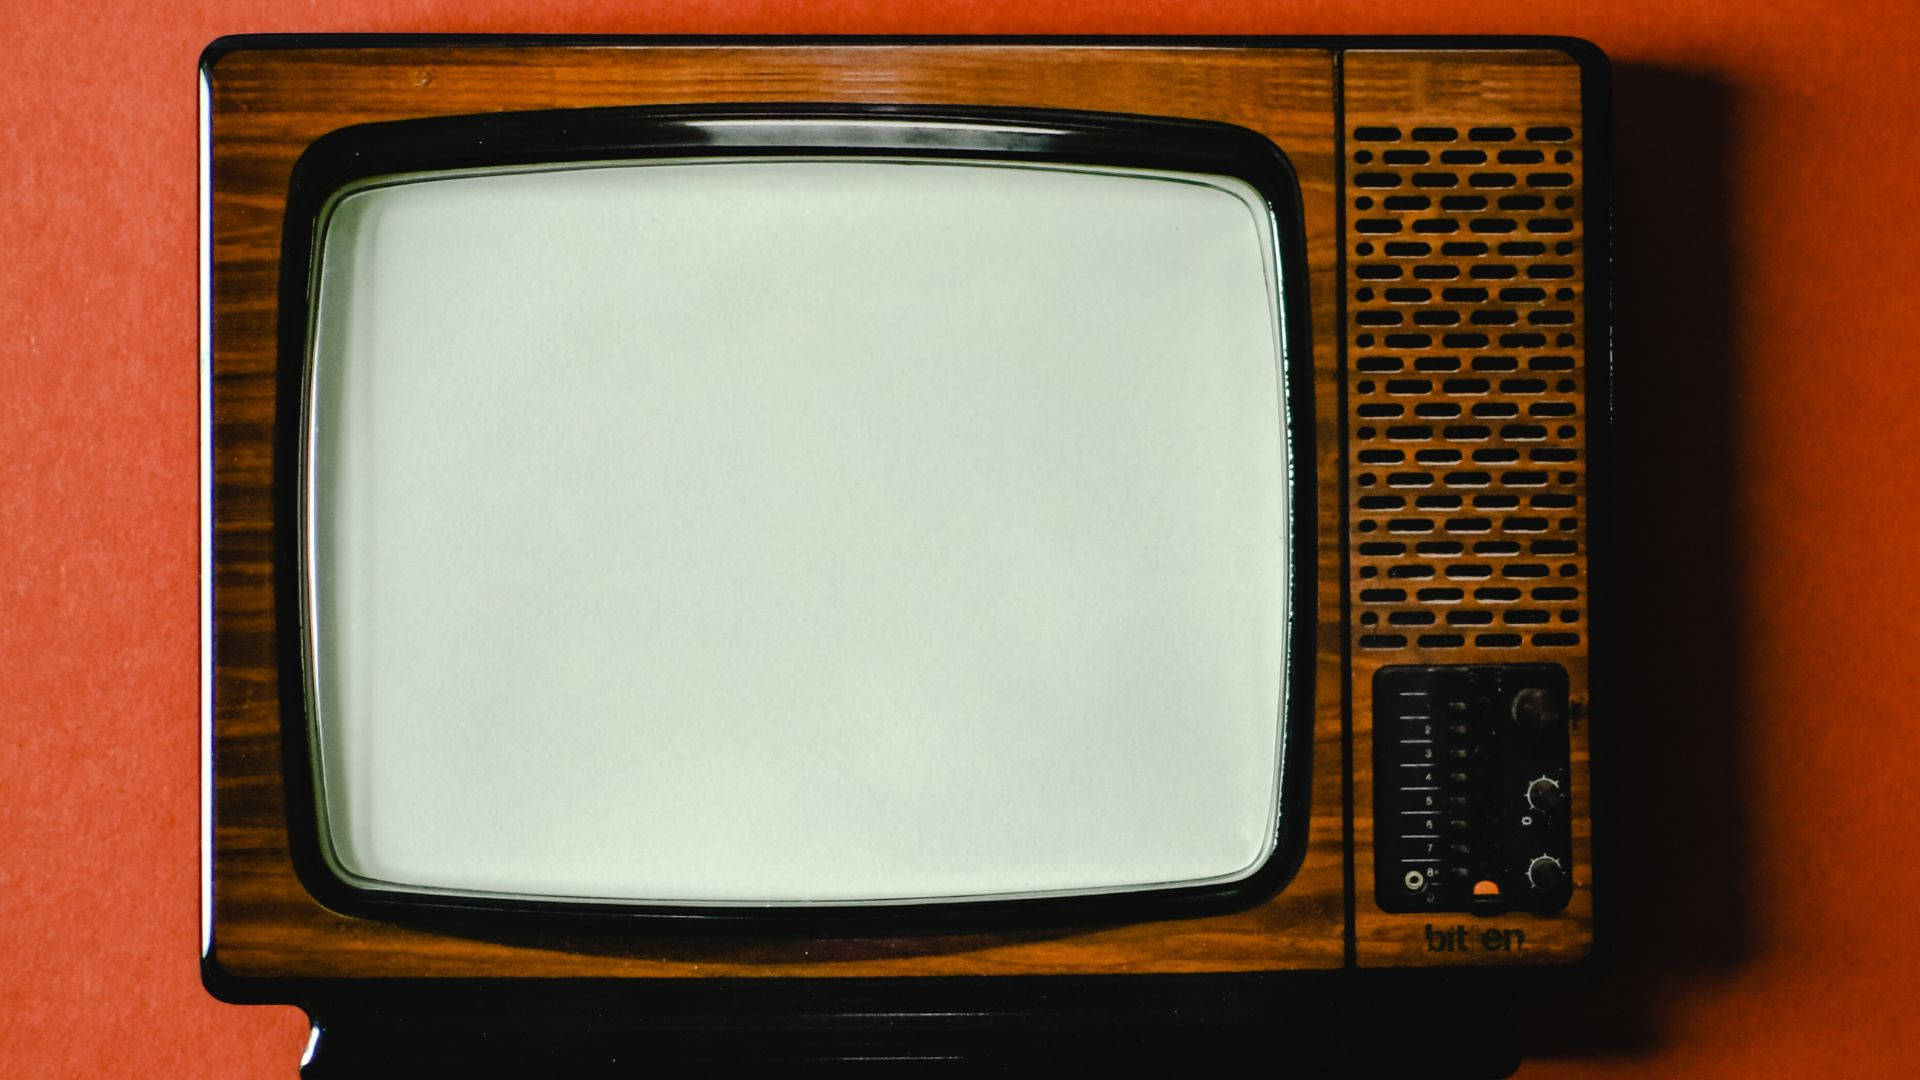 Antique Tv Set Orange Surface Background